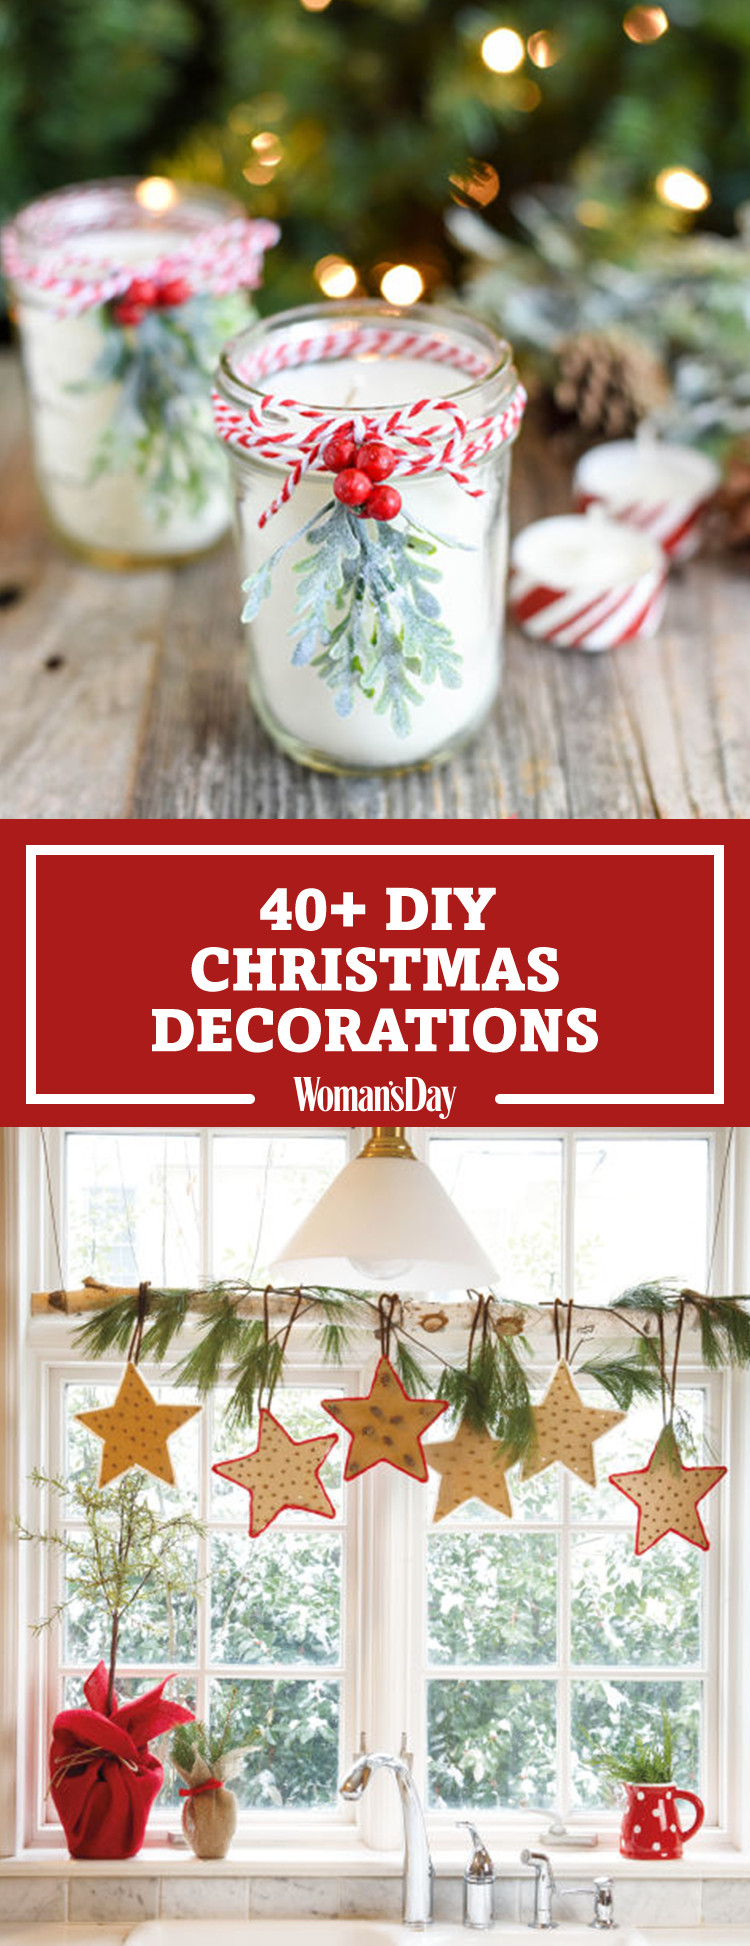 DIY Holiday Decorations Ideas
 47 Easy DIY Christmas Decorations Homemade Ideas for